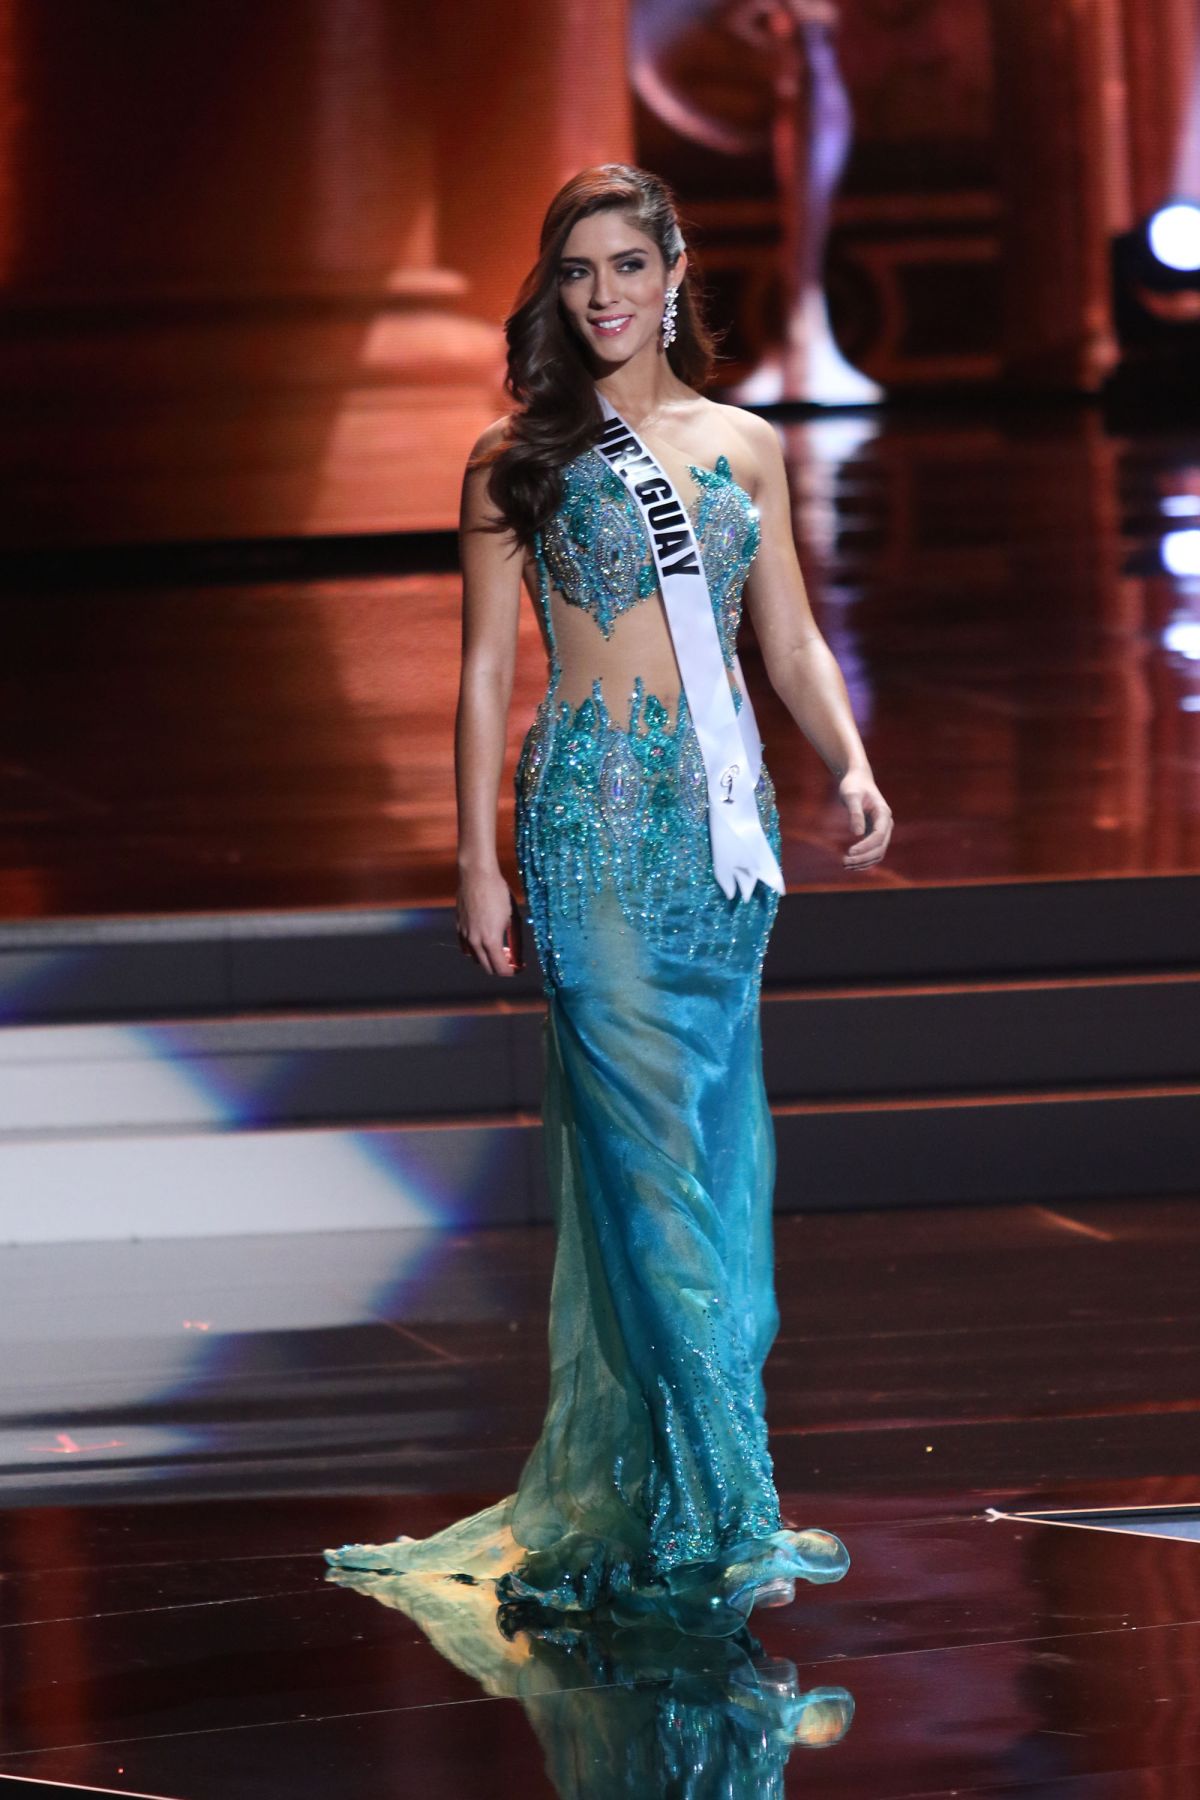 BIANCA SANCHEZ - Miss Universe 2015 pPreliminary Round 12/16/2015